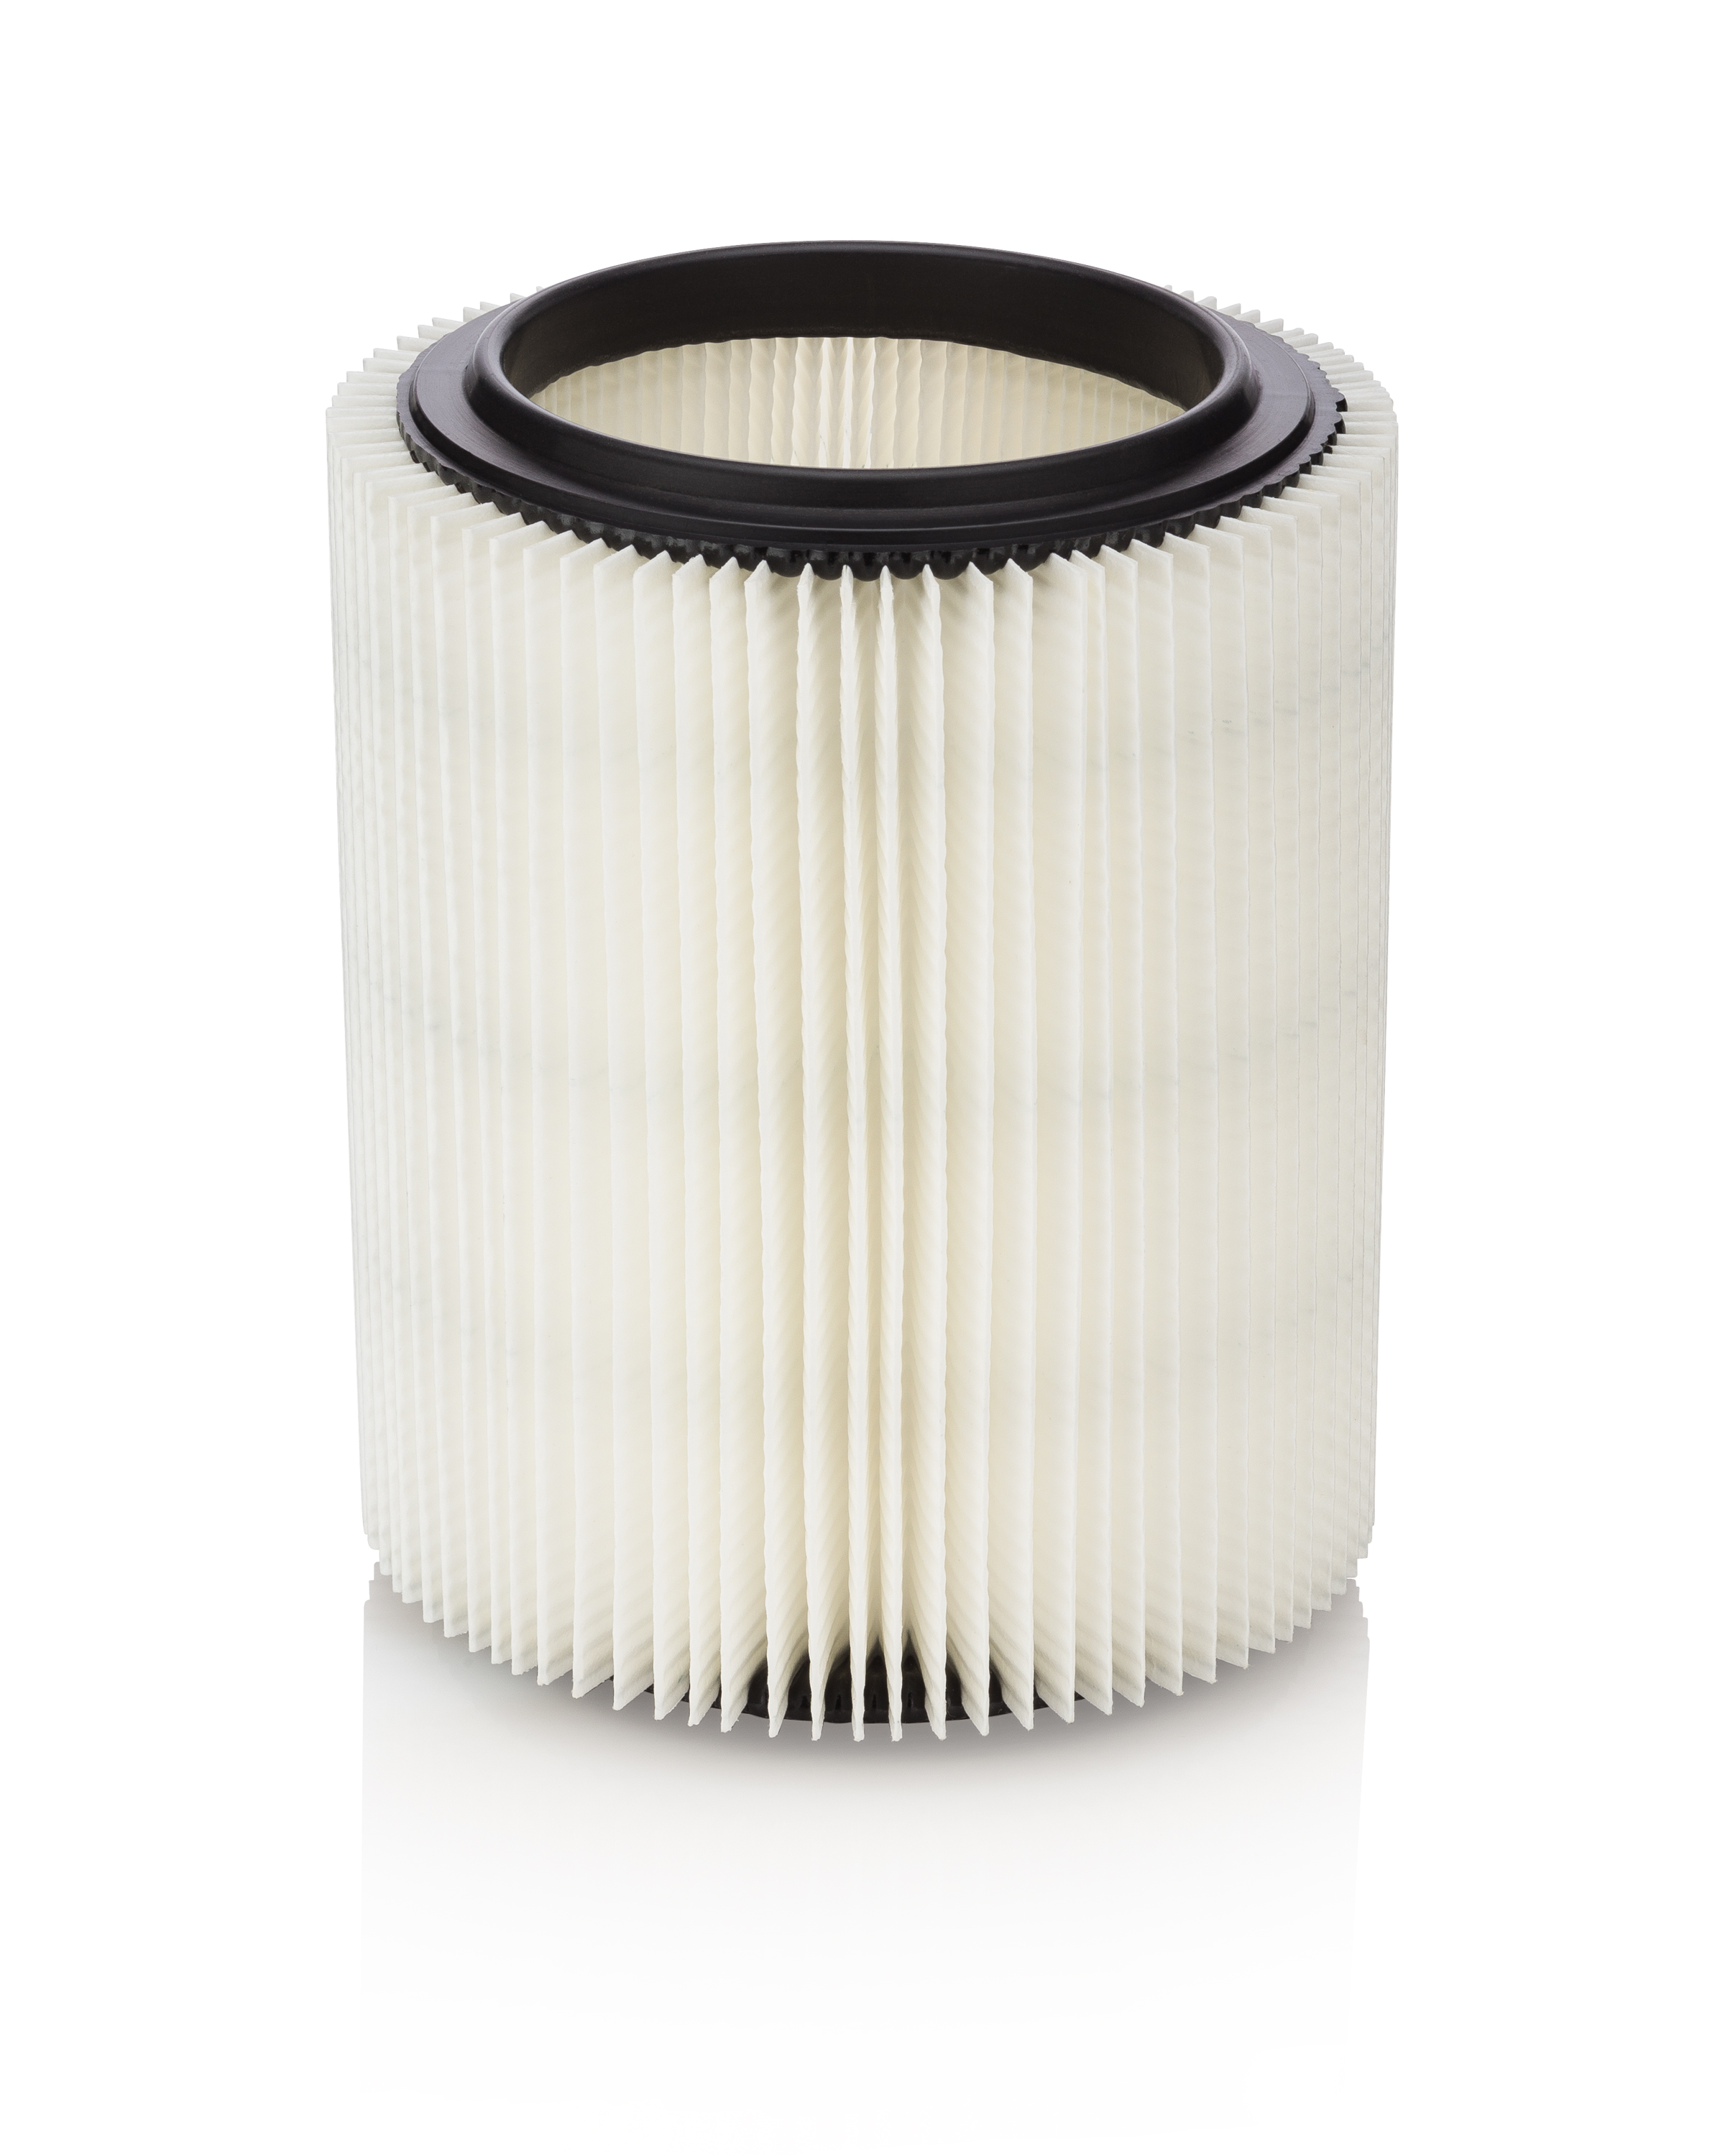 KoPach Filter Premium Craftsman & Ridgid Fine Particle Filter, Replacement for Part #’s 17816,17907 & 17912